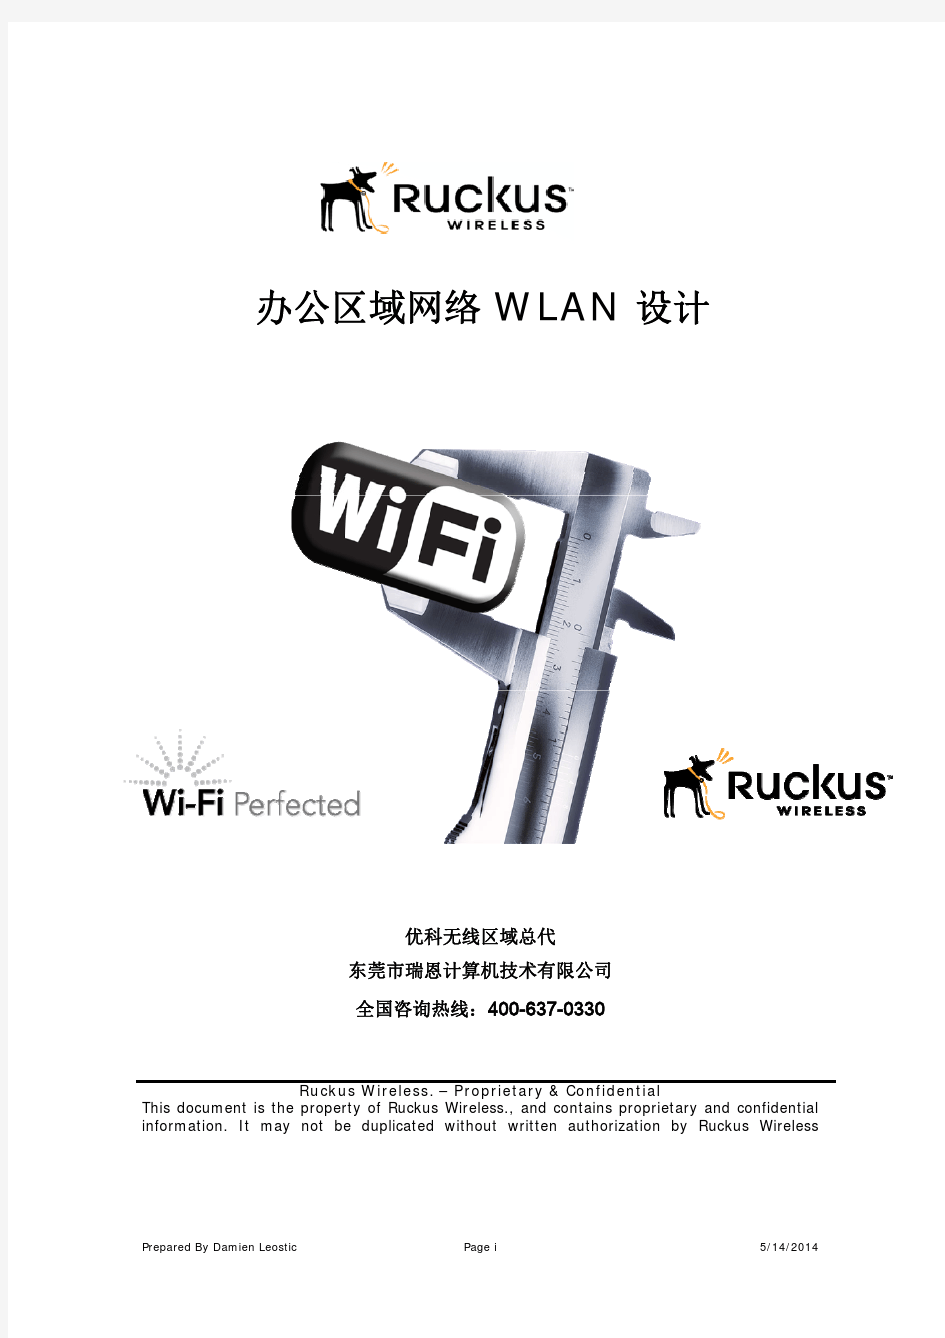 Ruckus Wireless 办公WLAN 无线网络解决方案